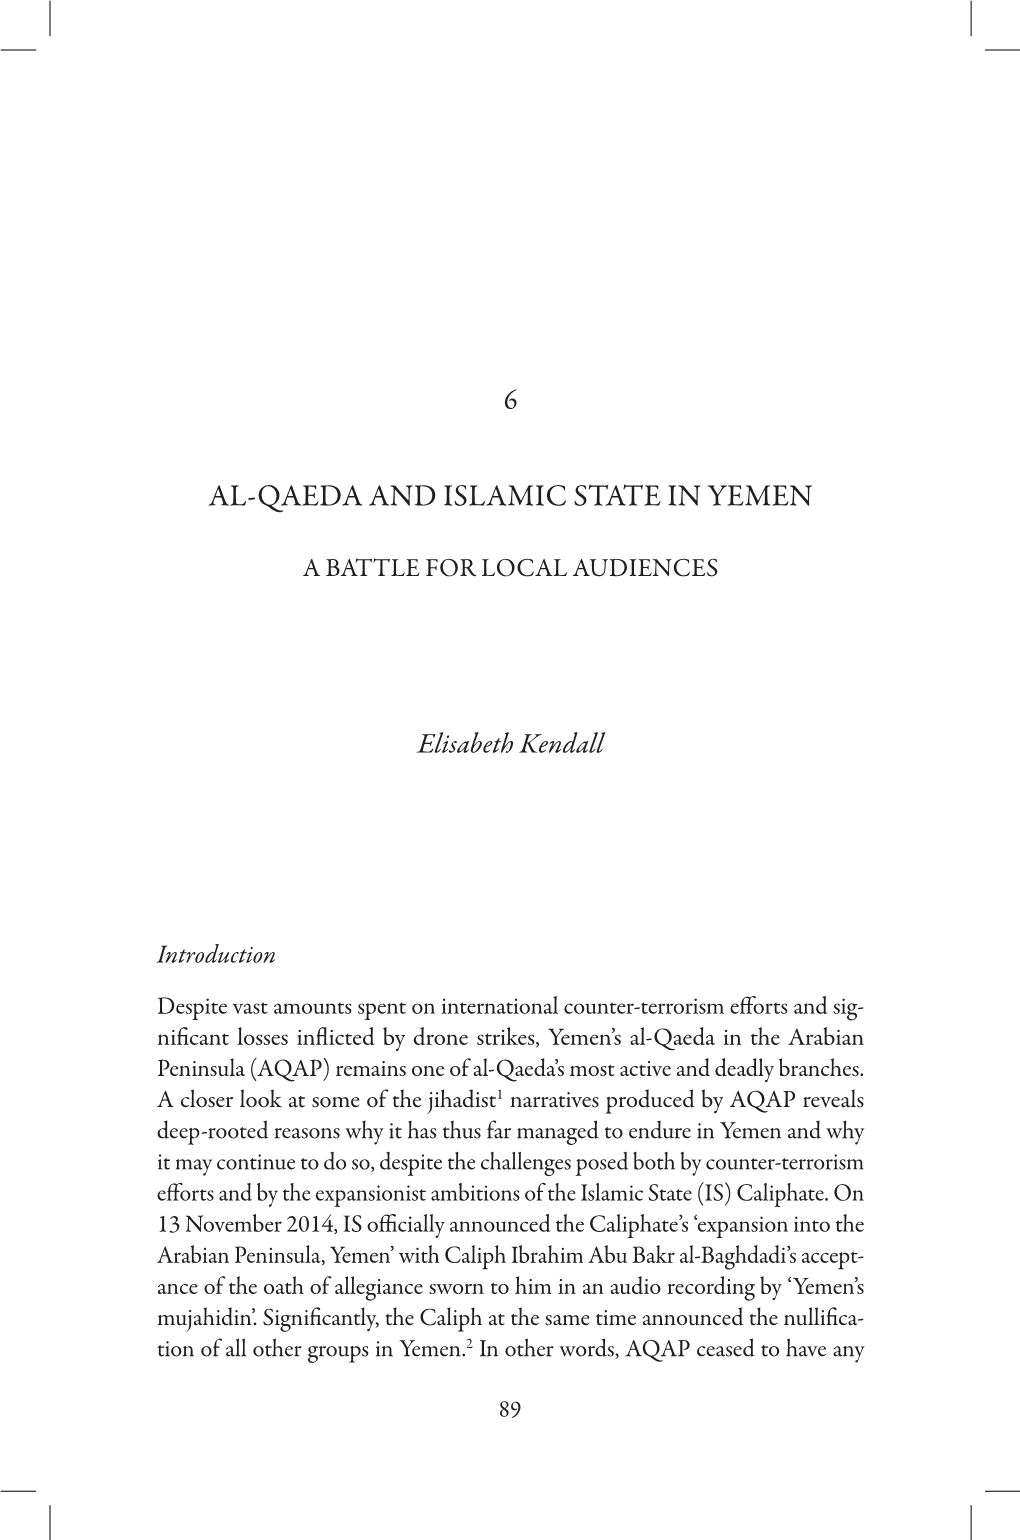 Al-Qaeda and Islamic State in Yemen